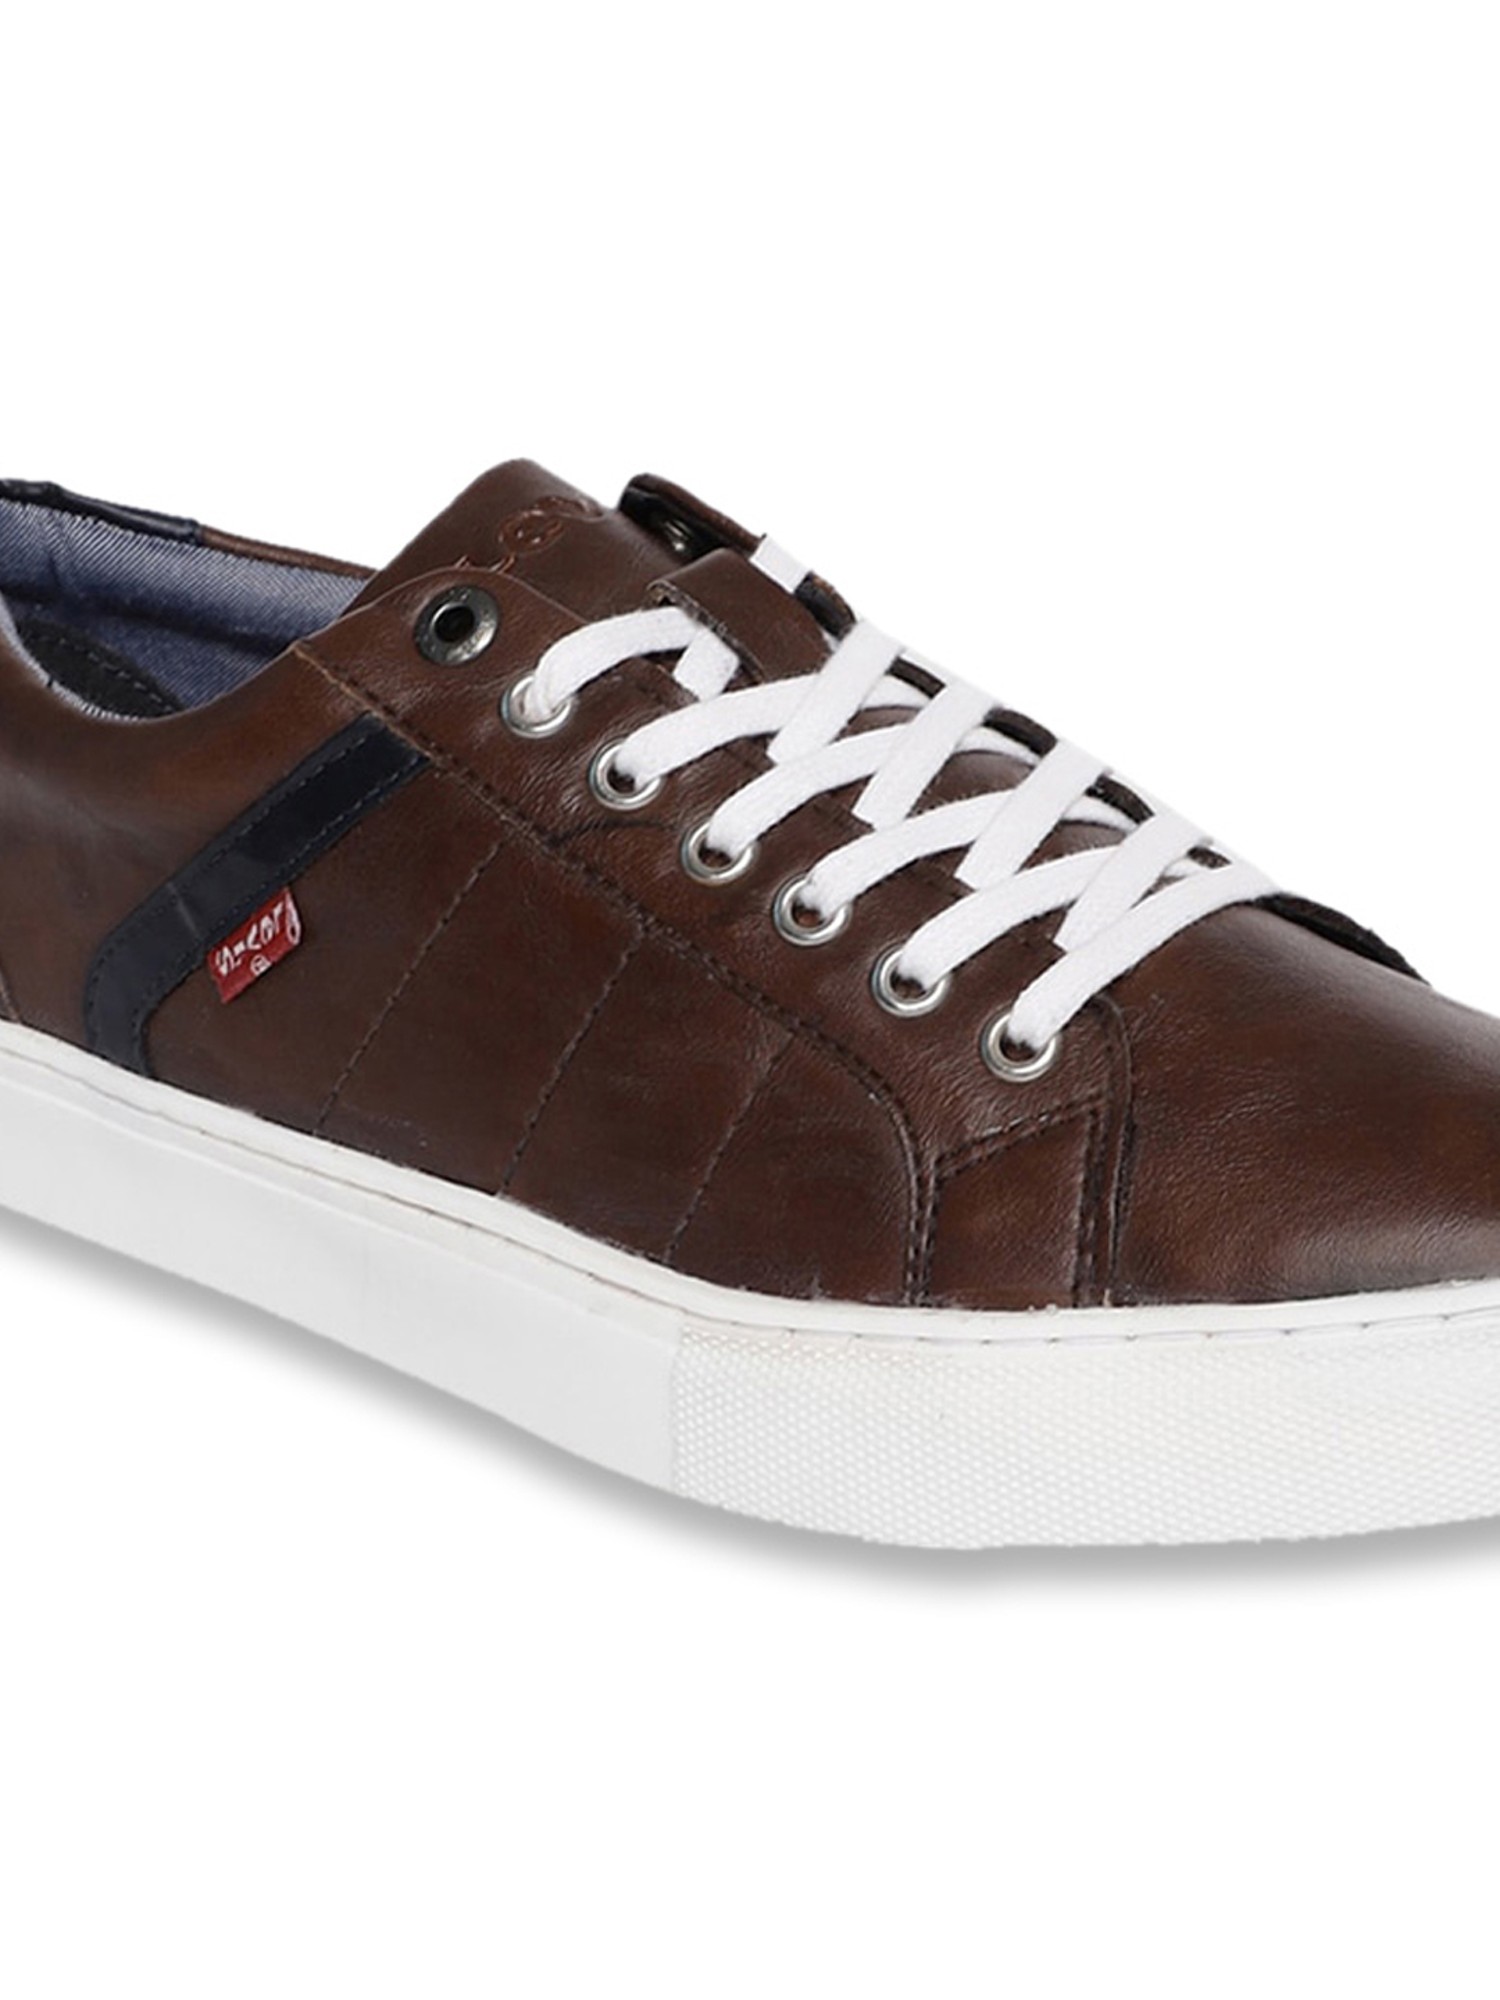 Levi's Men Malibu Shoe White Sneakers-10 UK/India (44 EU) (38099-0327) :  Amazon.in: Clothing & Accessories